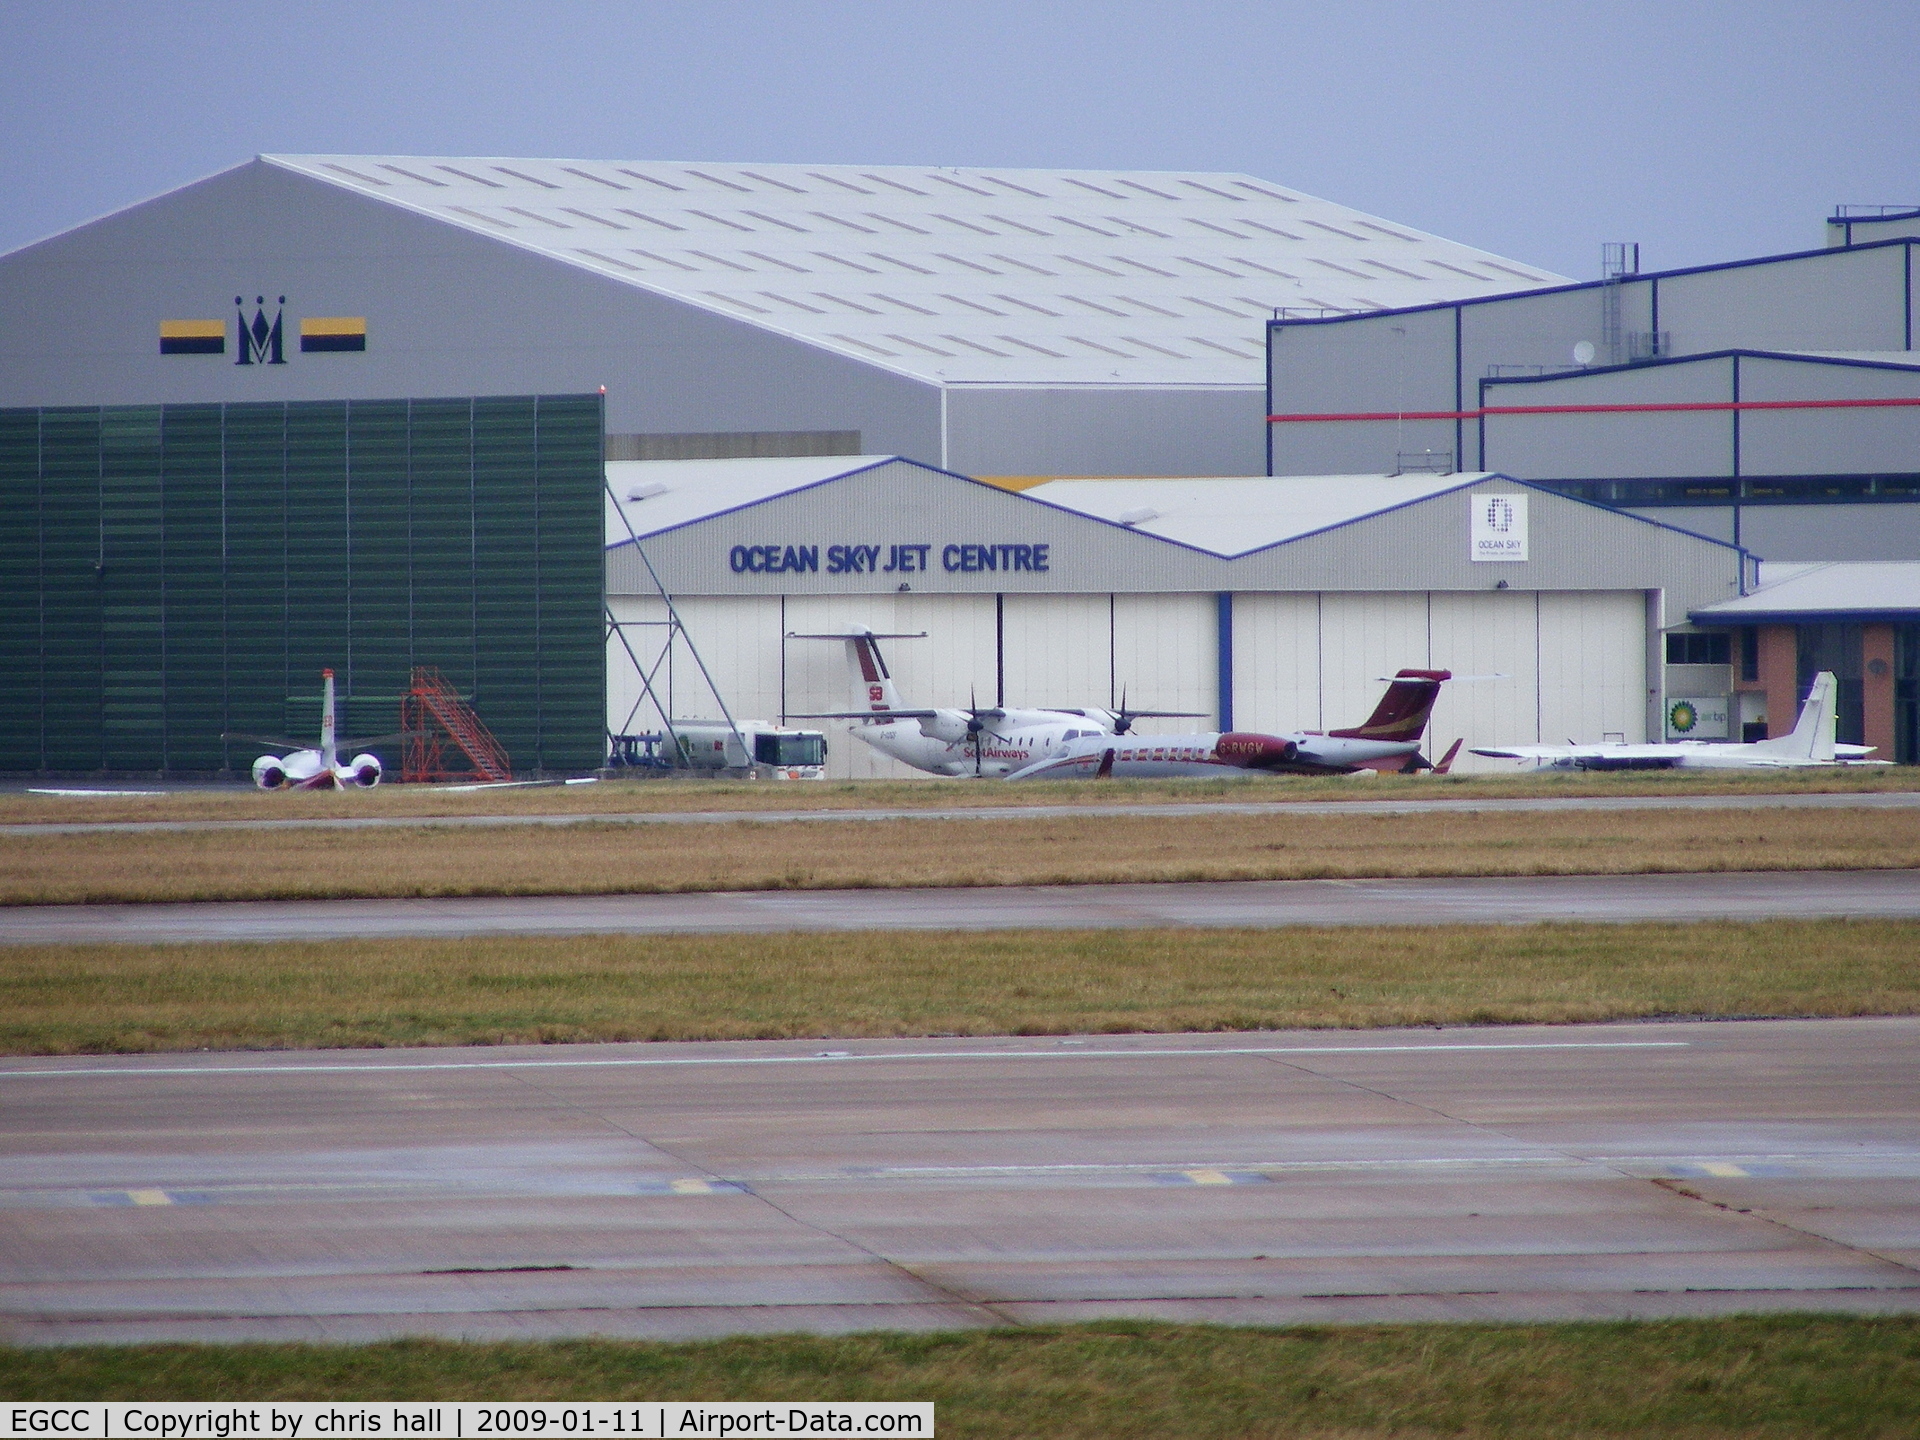 Manchester Airport, Manchester, England United Kingdom (EGCC) - Ocean Sky Jet Center